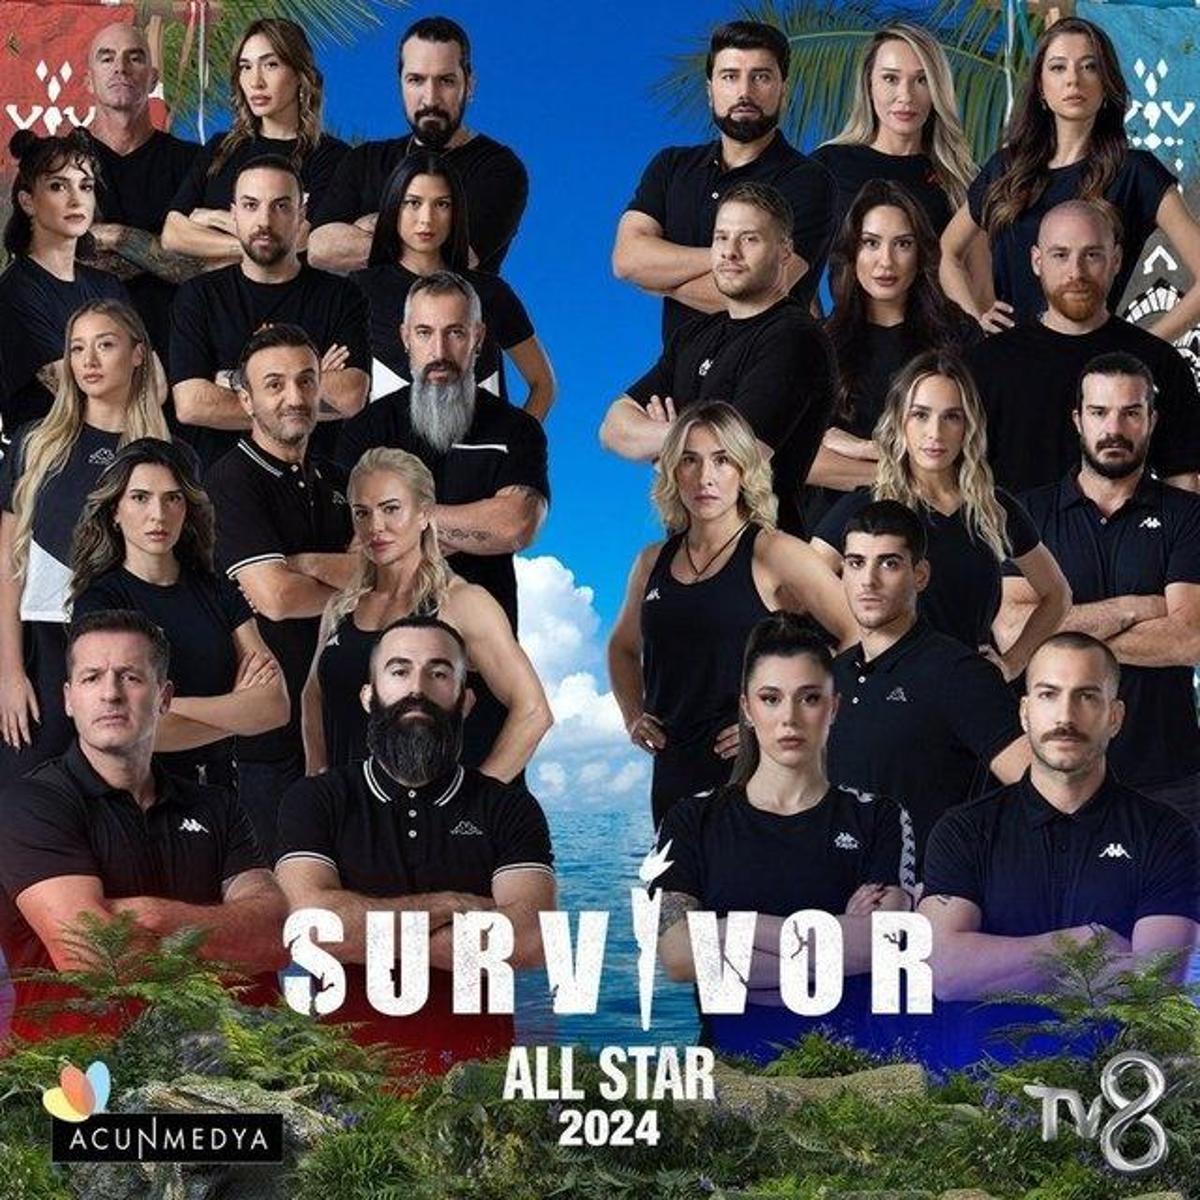 Survivor All Star 2024 kadrosu Survivor 2024 kırmızı ve mavi takımda